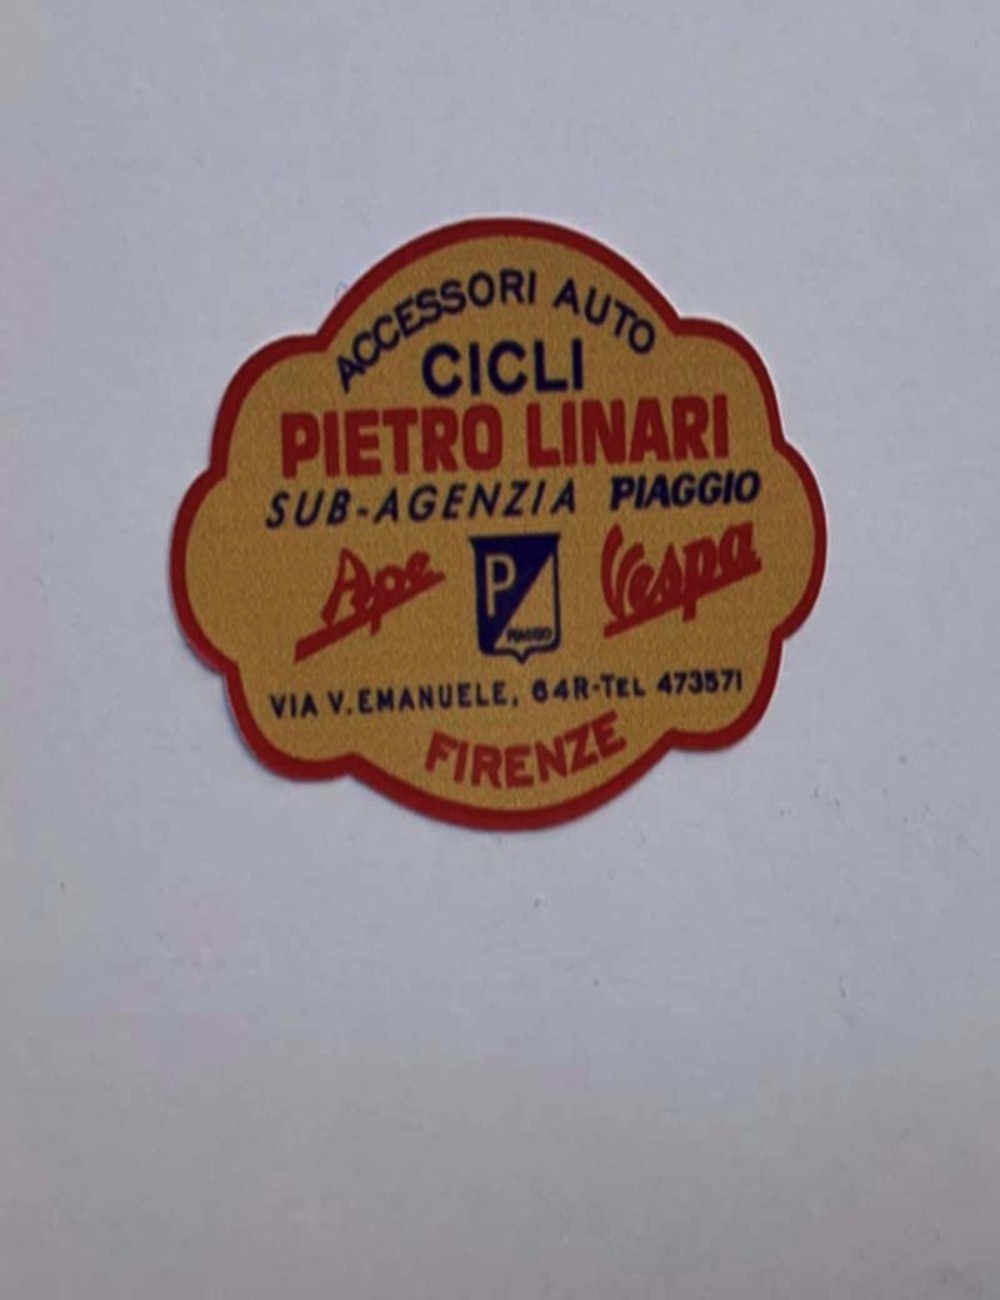 Adesivo concessionario Pietro Linari. Dimensioni 5 cm x 3,5 cm.